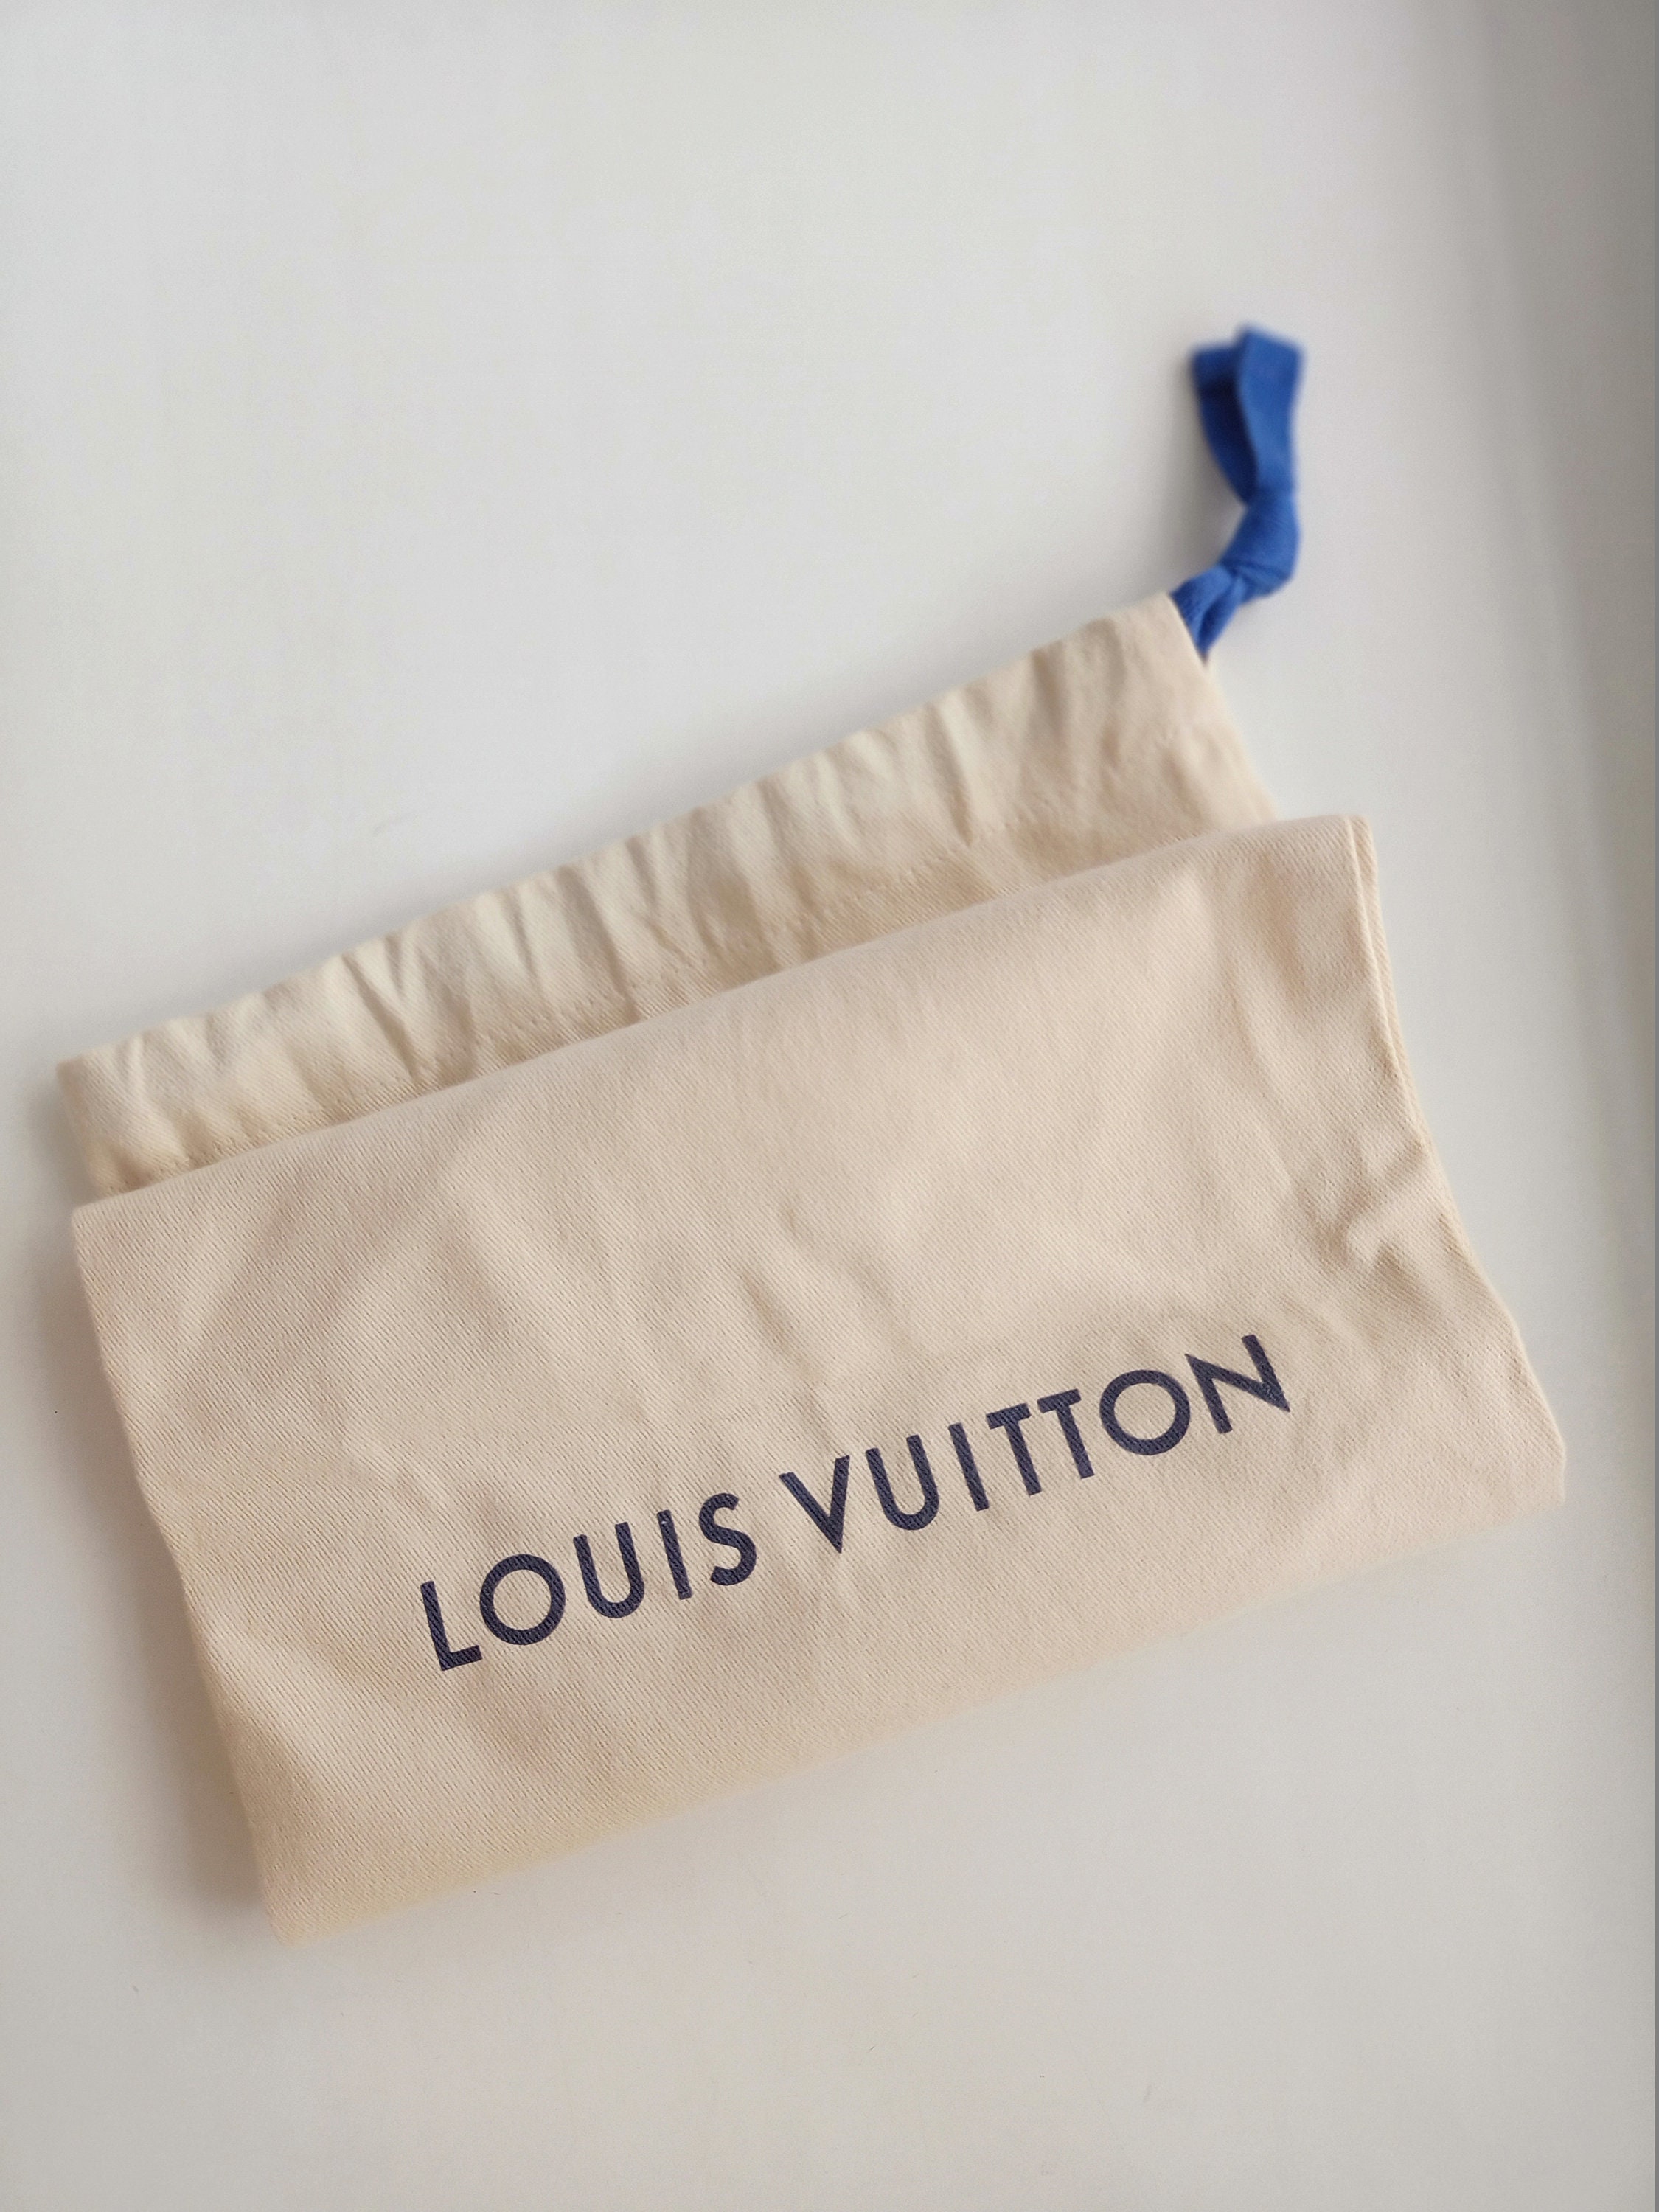 Louis Vuitton Louis Vuitton Dust bag for Travel Bags - Drawstring